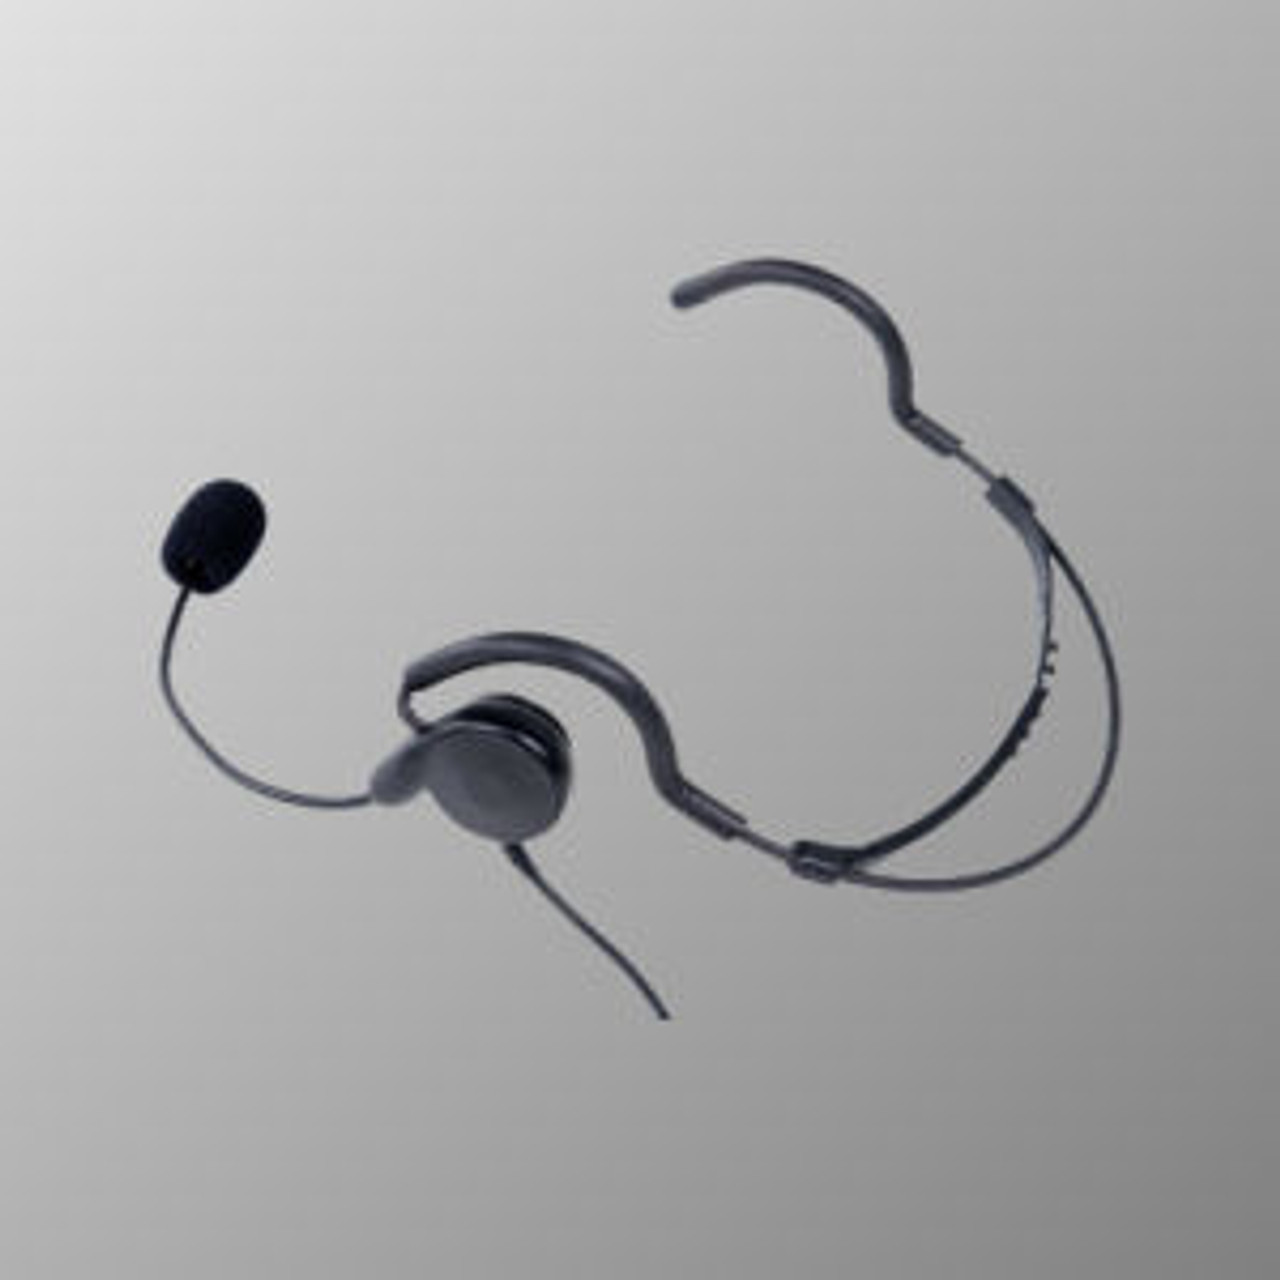 Motorola CT250 Behind The Head Single Muff Noise Canceling Headset